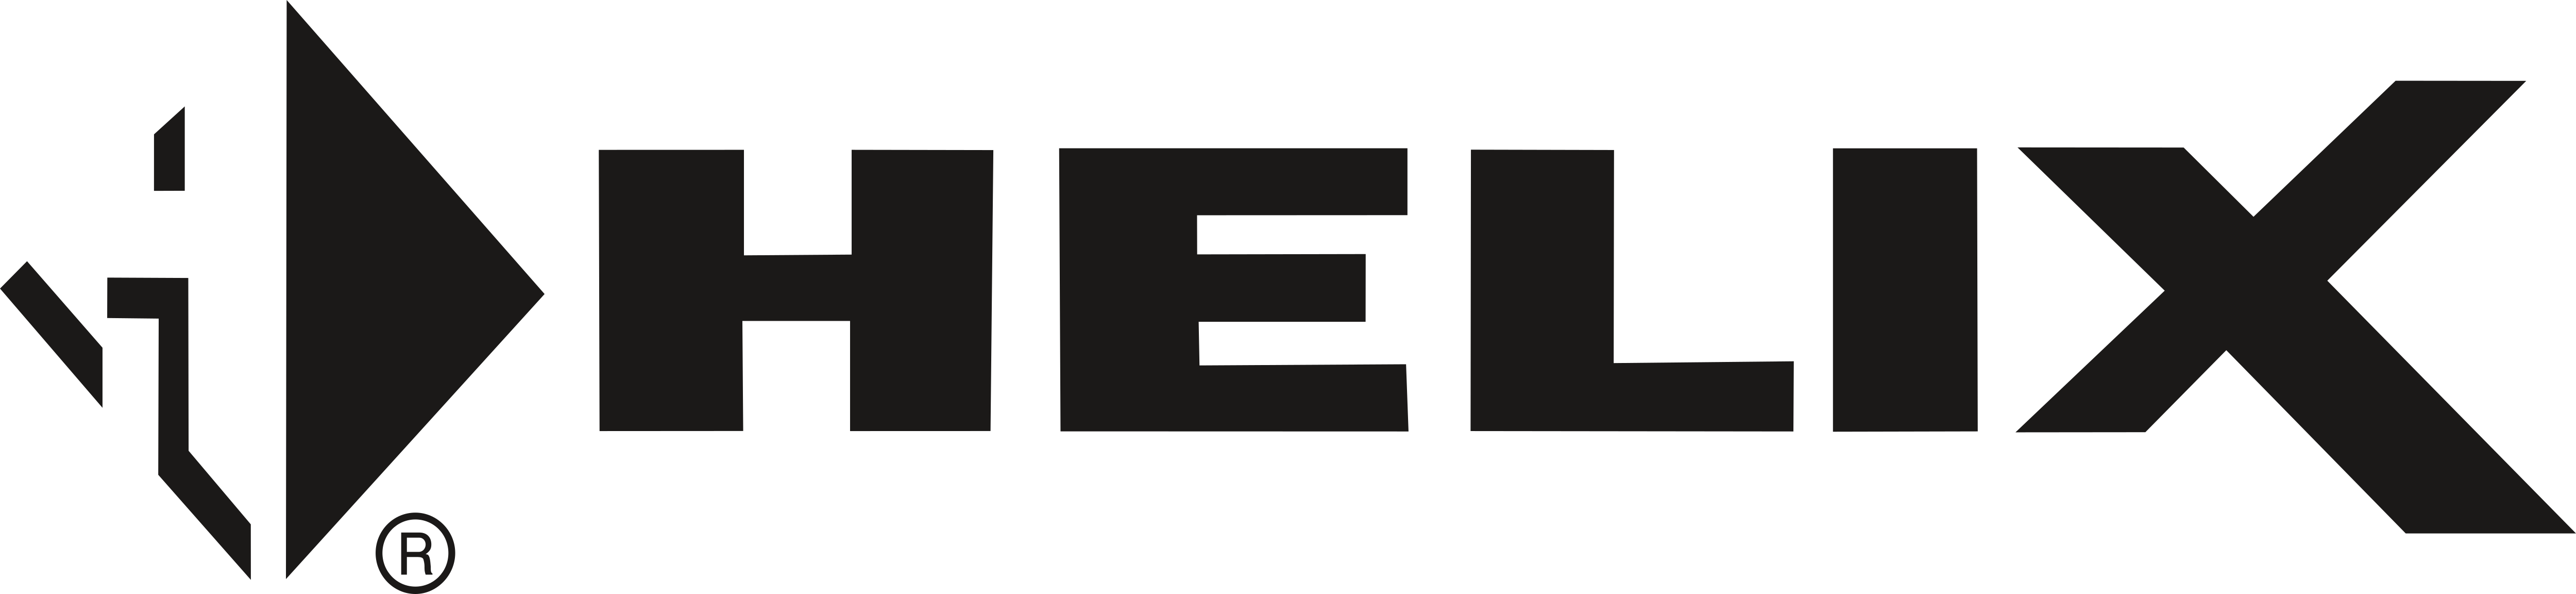 Helix_Logo.png